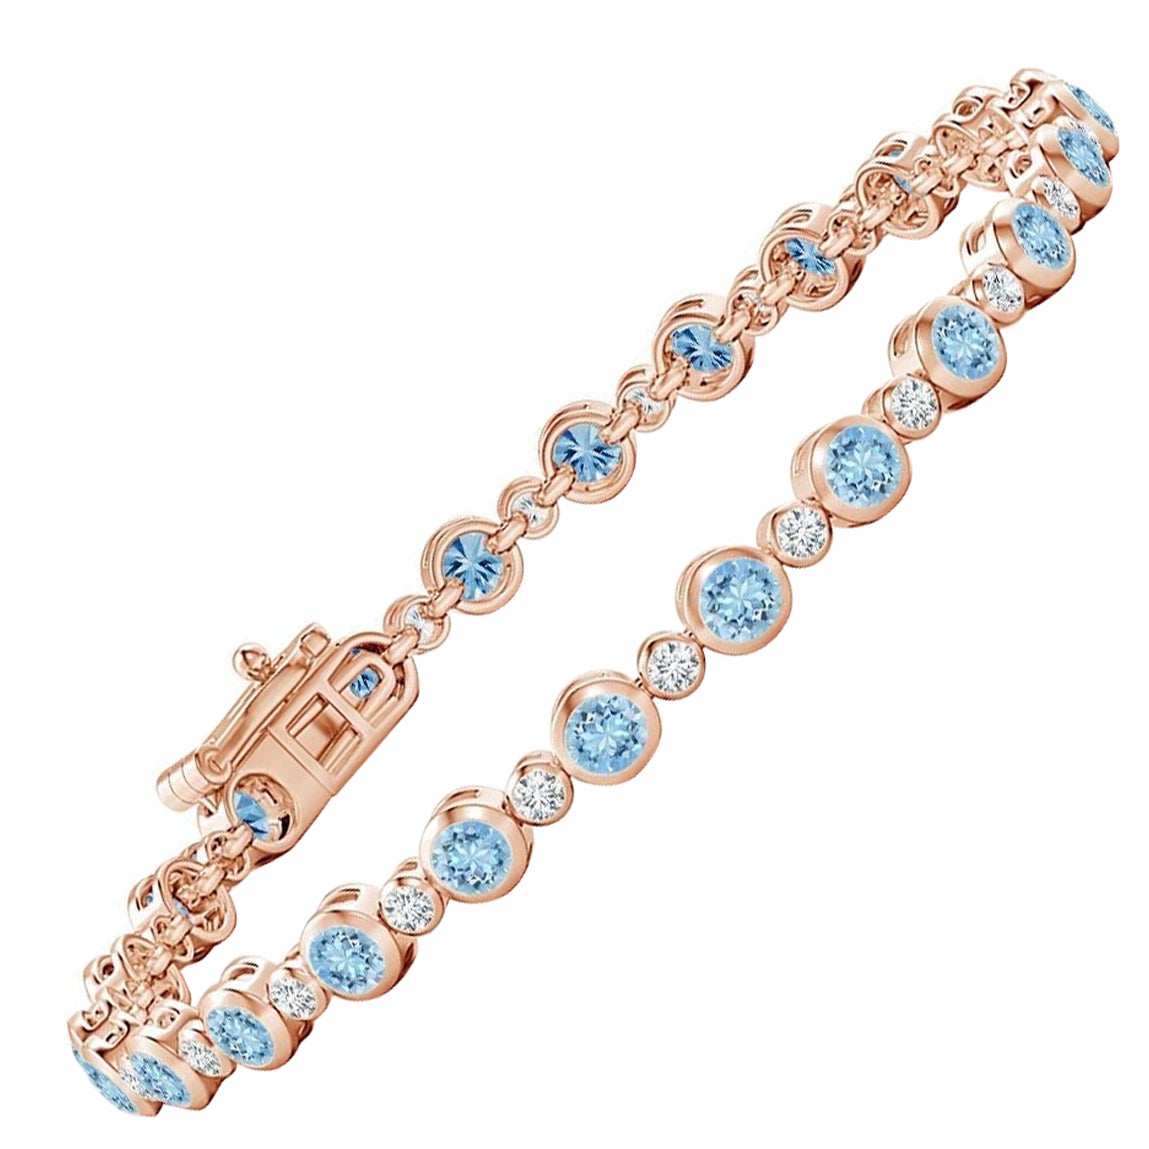 Bezel-Set 2.40ct Aquamarine and Diamond Tennis Bracelet in 14K Rose Gold For Sale